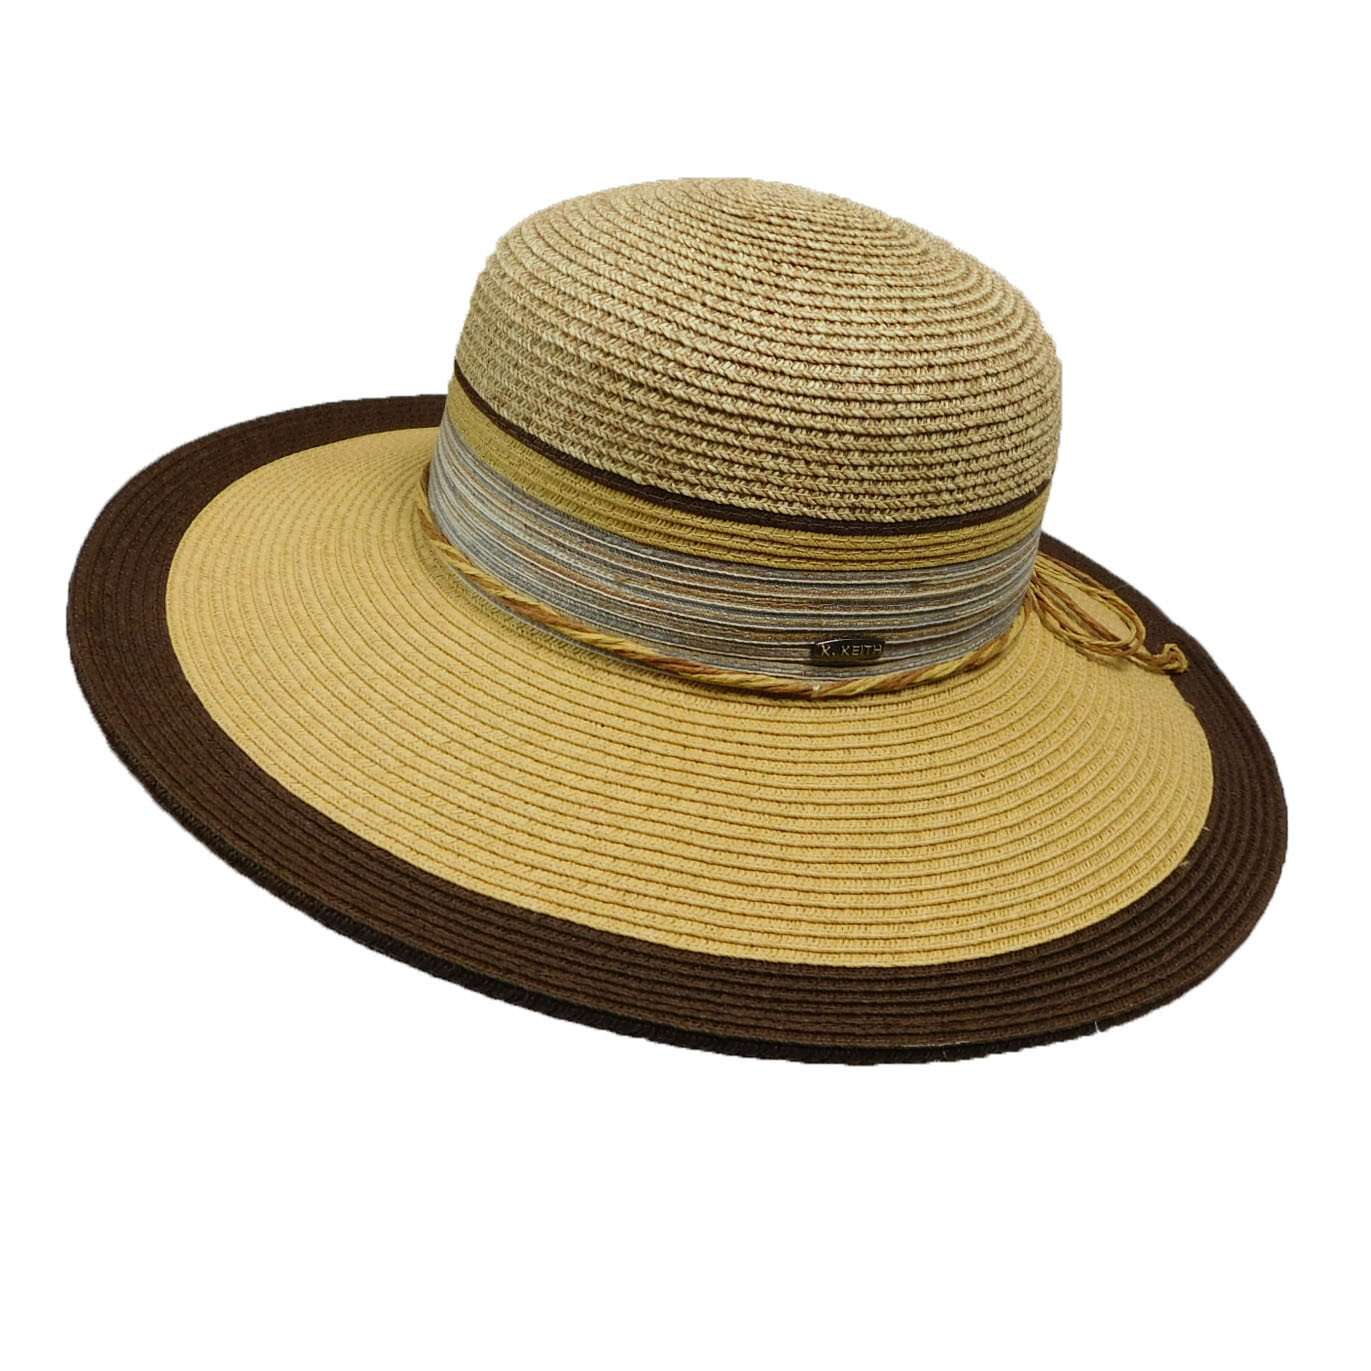 Karen Keith Multi Tone Sun Hat Floppy Hat Great hats by Karen Keith WSbt31NT Natural  